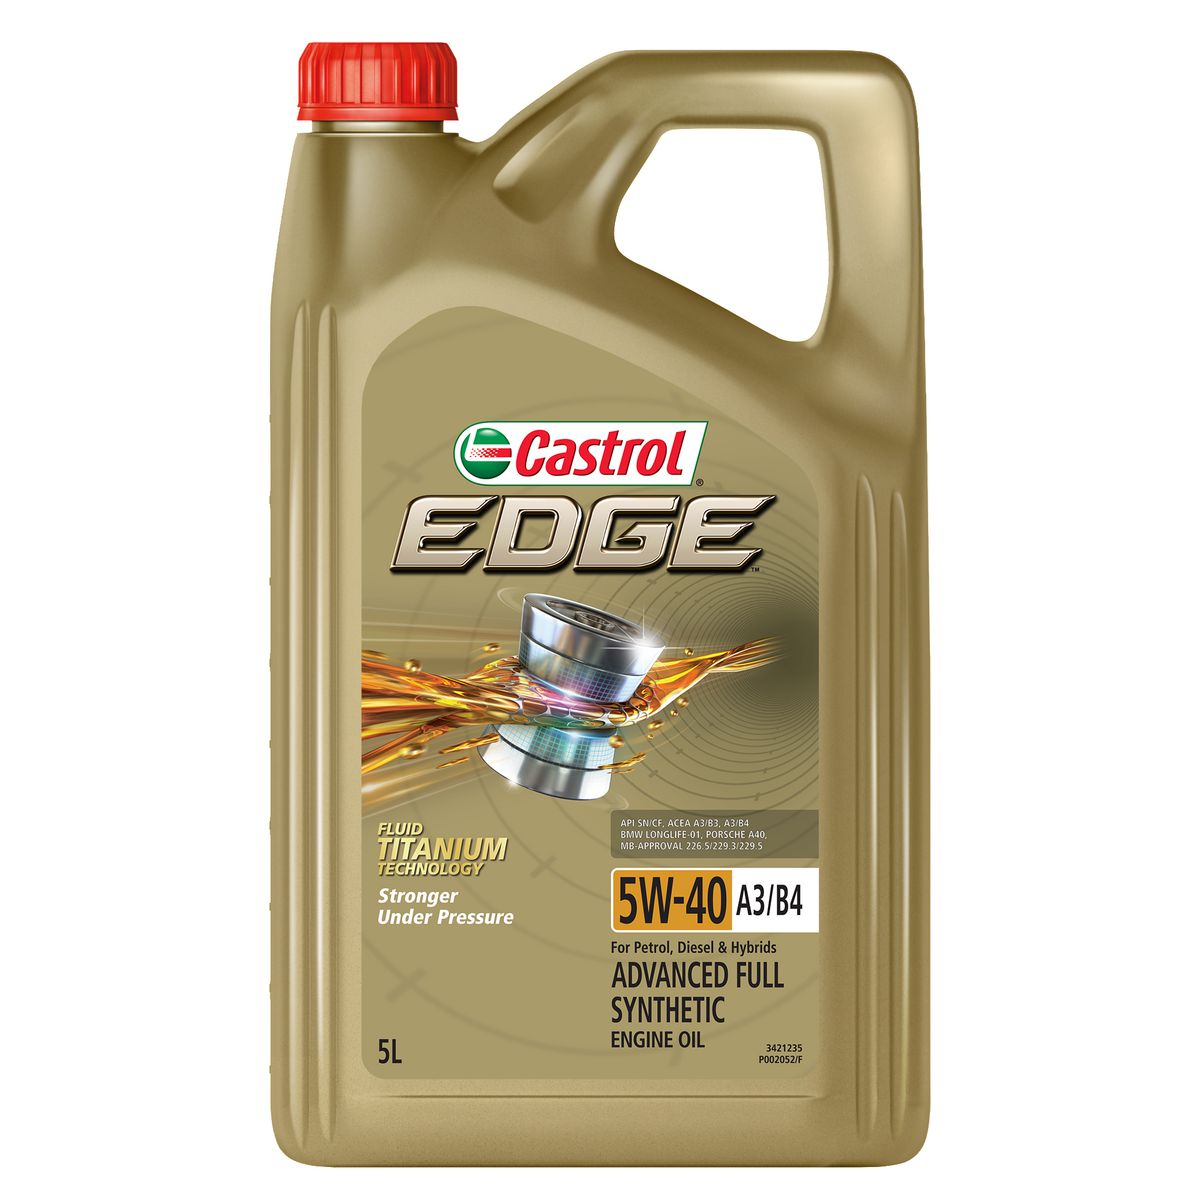 Castrol EDGE Full Synthetic 5W-30 Engine Oil 5L - 3413348